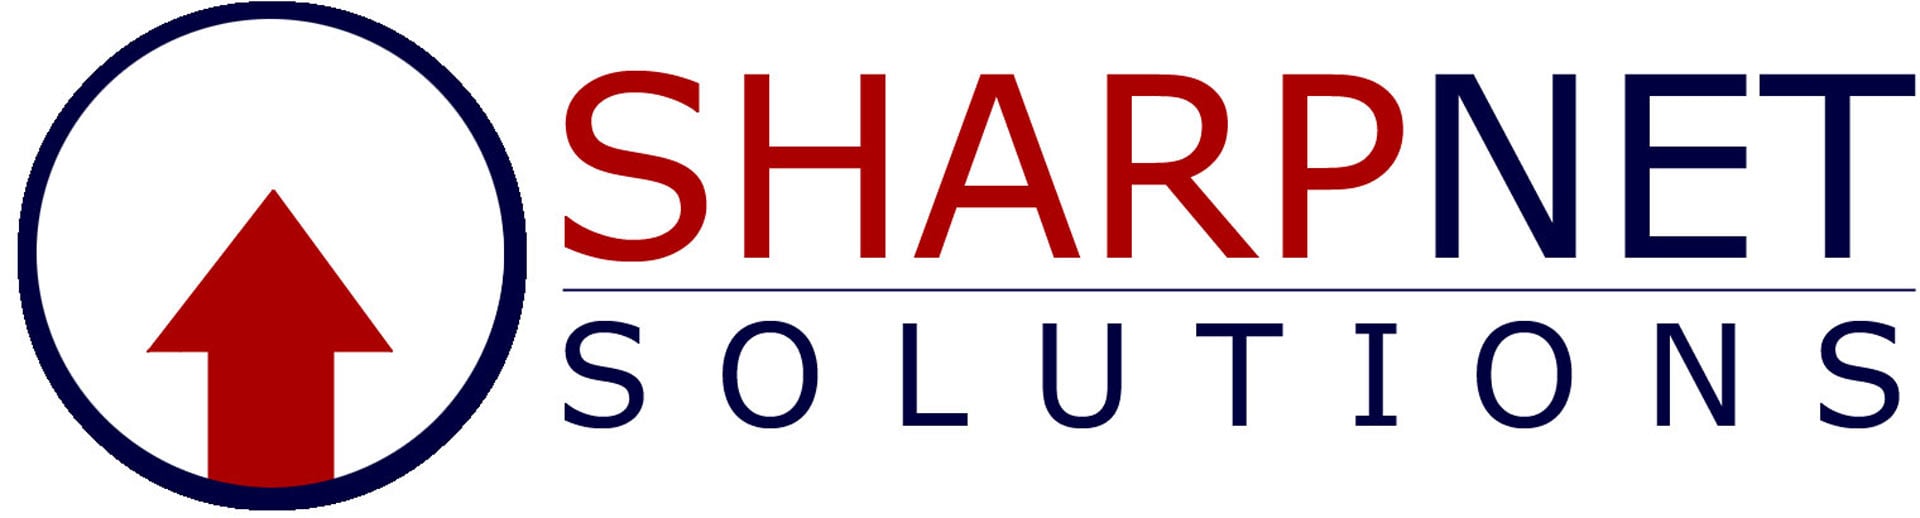 Best Social Media Marketing Company Logo: SharpNet